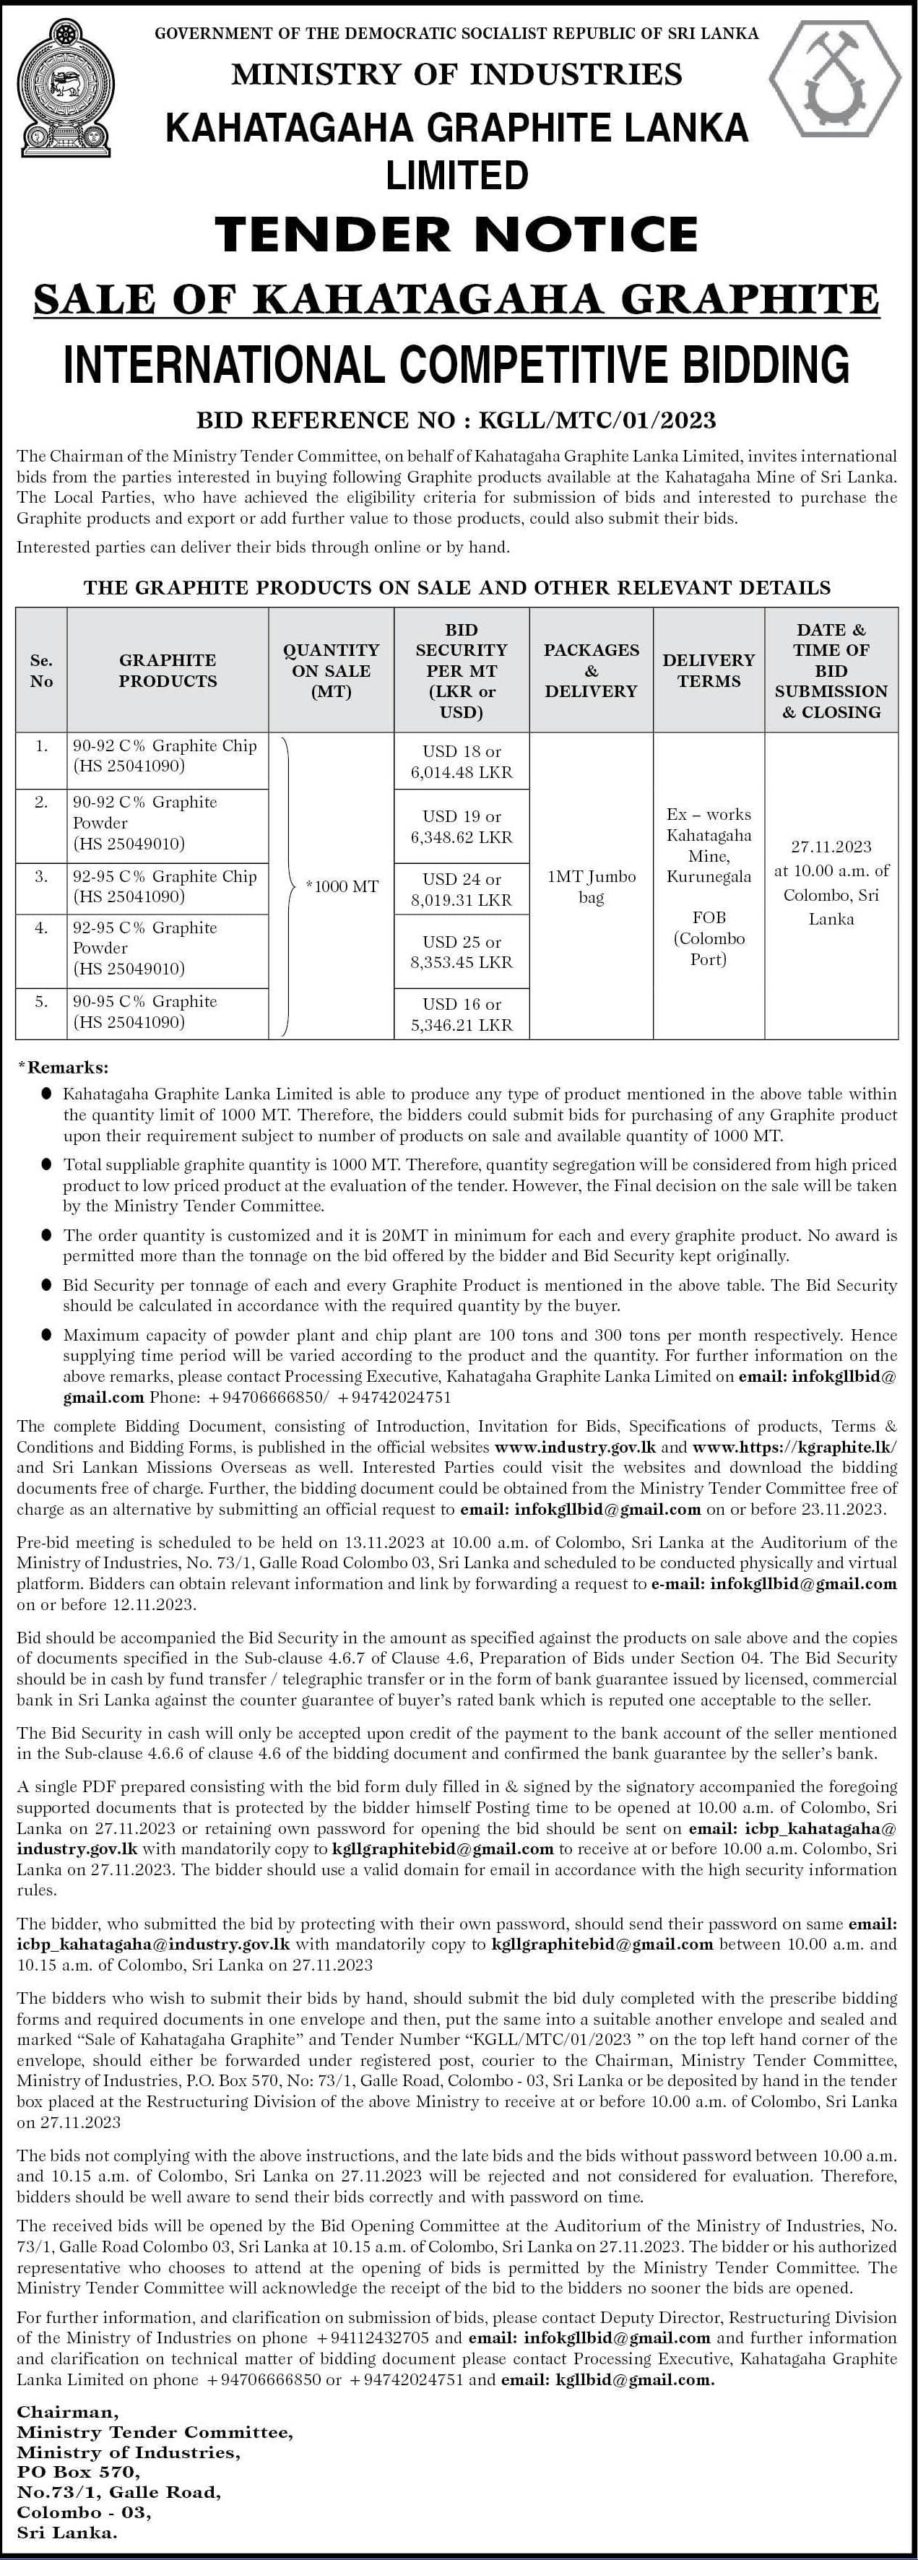 Procurement Notice - kahatagaha Graphite Lanka Limited (Tender Reference No. KGLL/MTC/01/2023)